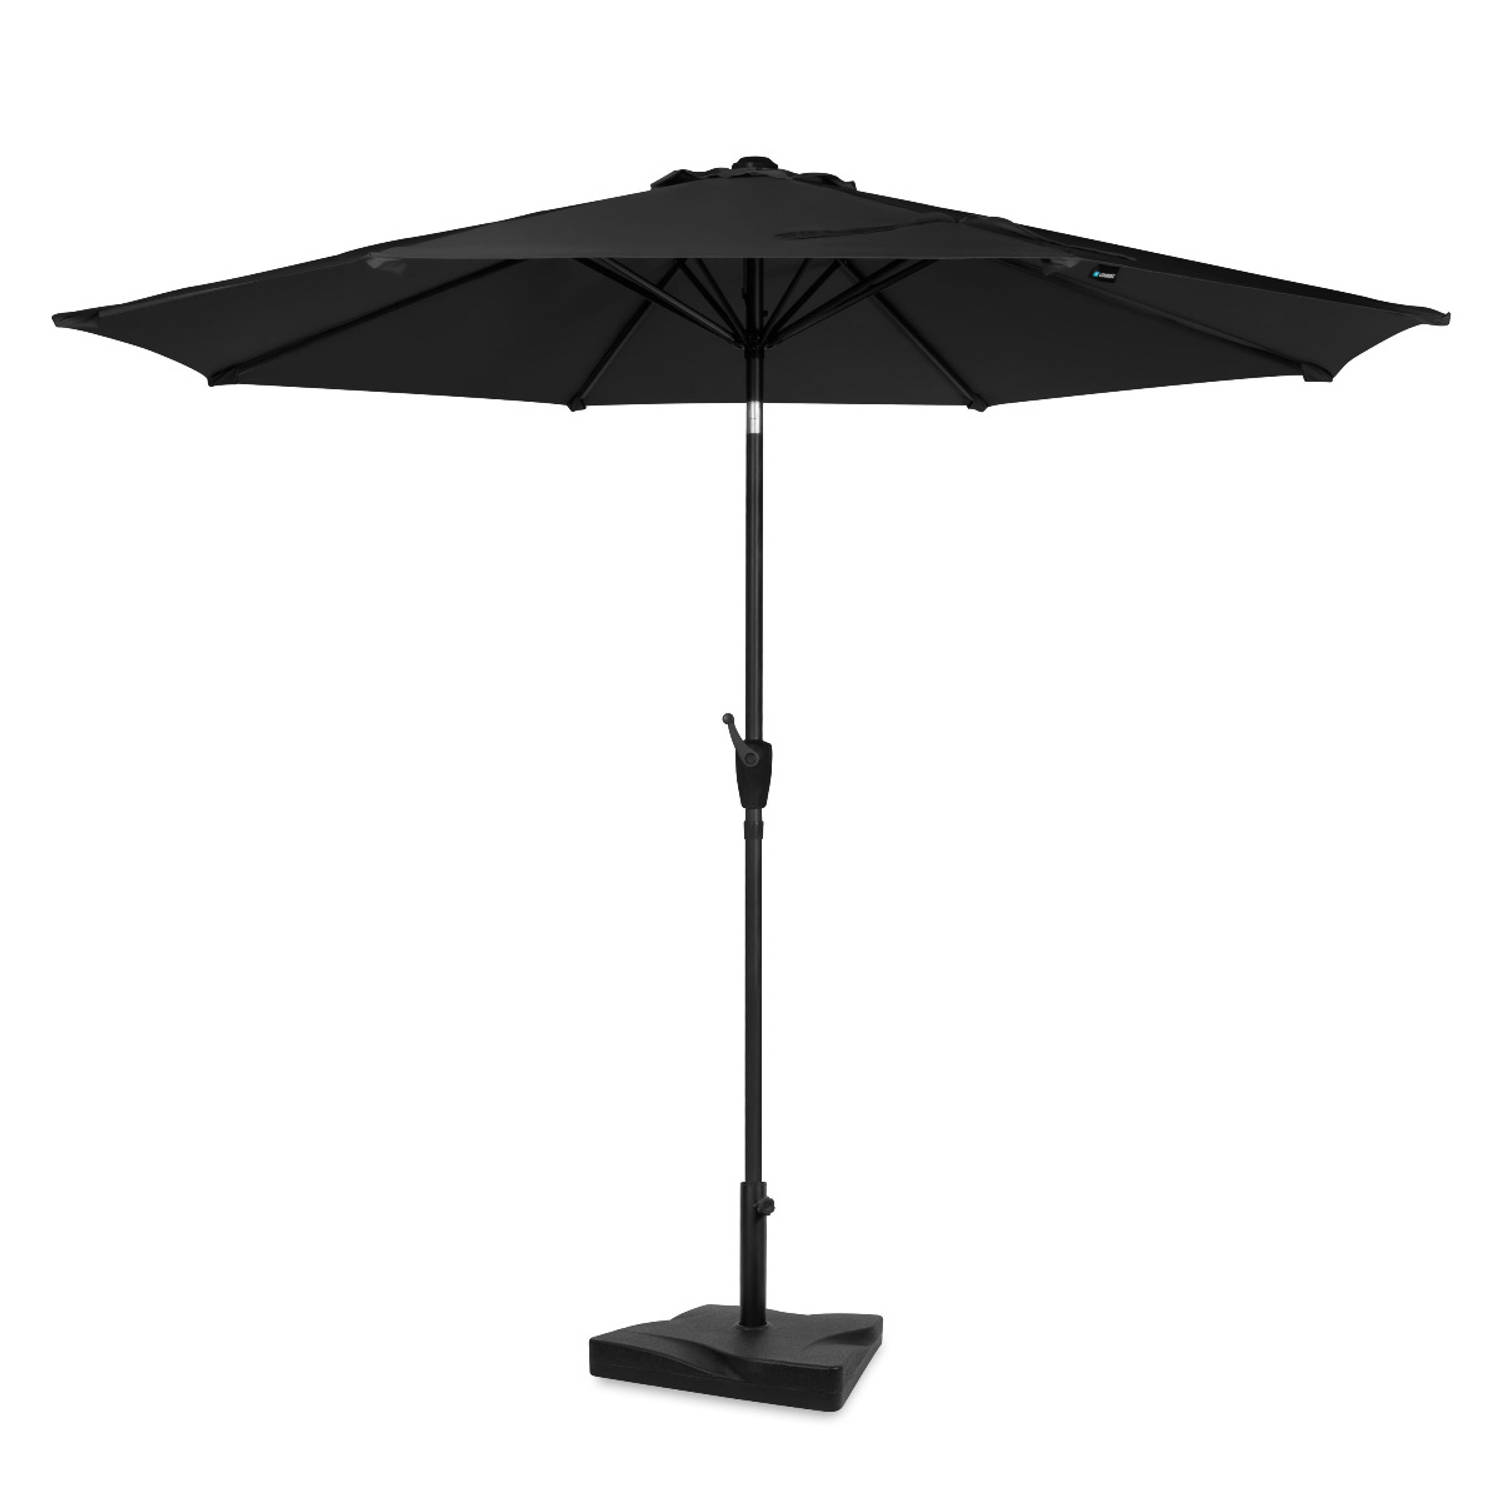 VONROC Premium Parasol Recanati Ø300cm – Duurzame stokparasol combi set incl. parasolvoet – Kantelbaar – UV werend doek - Antraciet/Zwart – Incl. beschermhoes